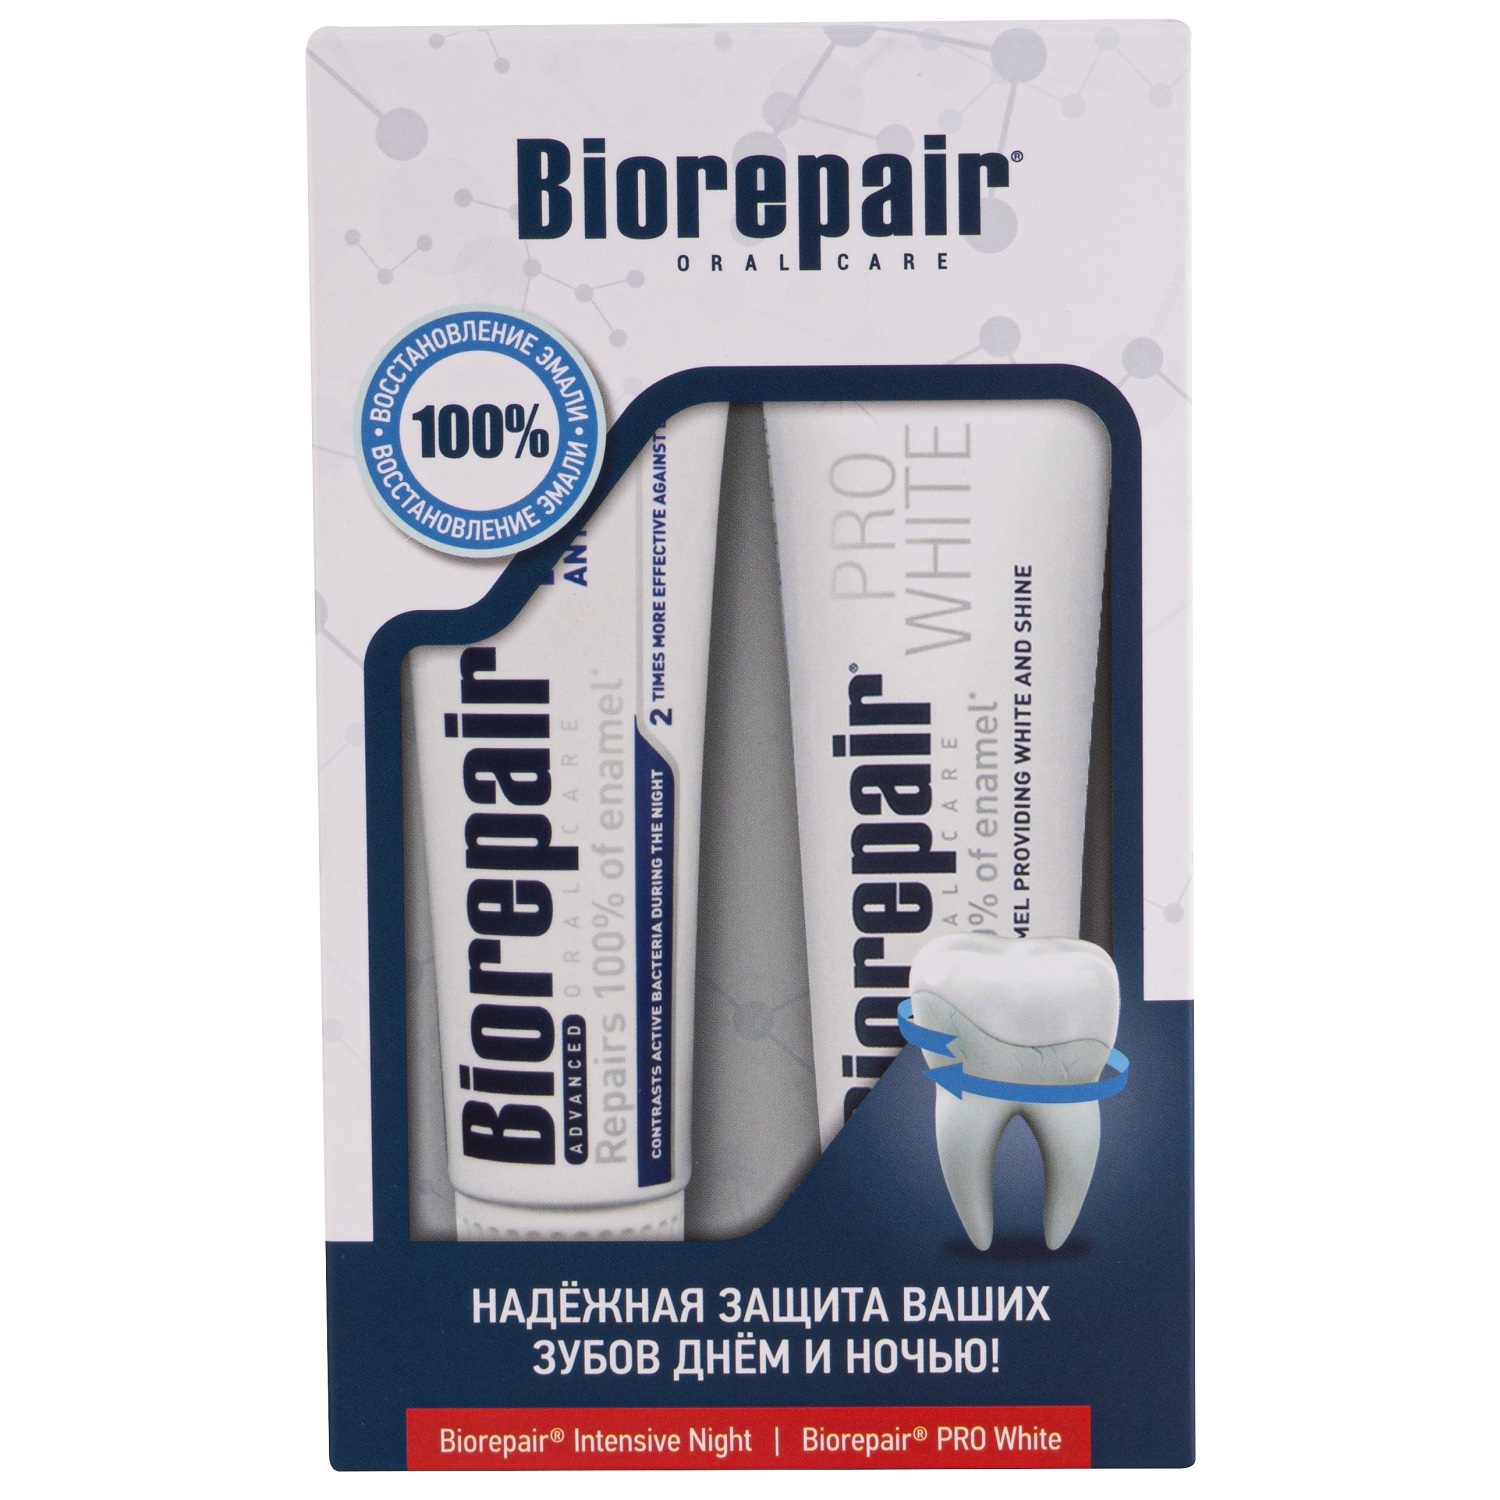 Biorepair Набор зубных паст Защита и блеск: Pro White 75 мл + Intensive Night Repair 75 мл (Biorepair, Отбеливание и лечение)